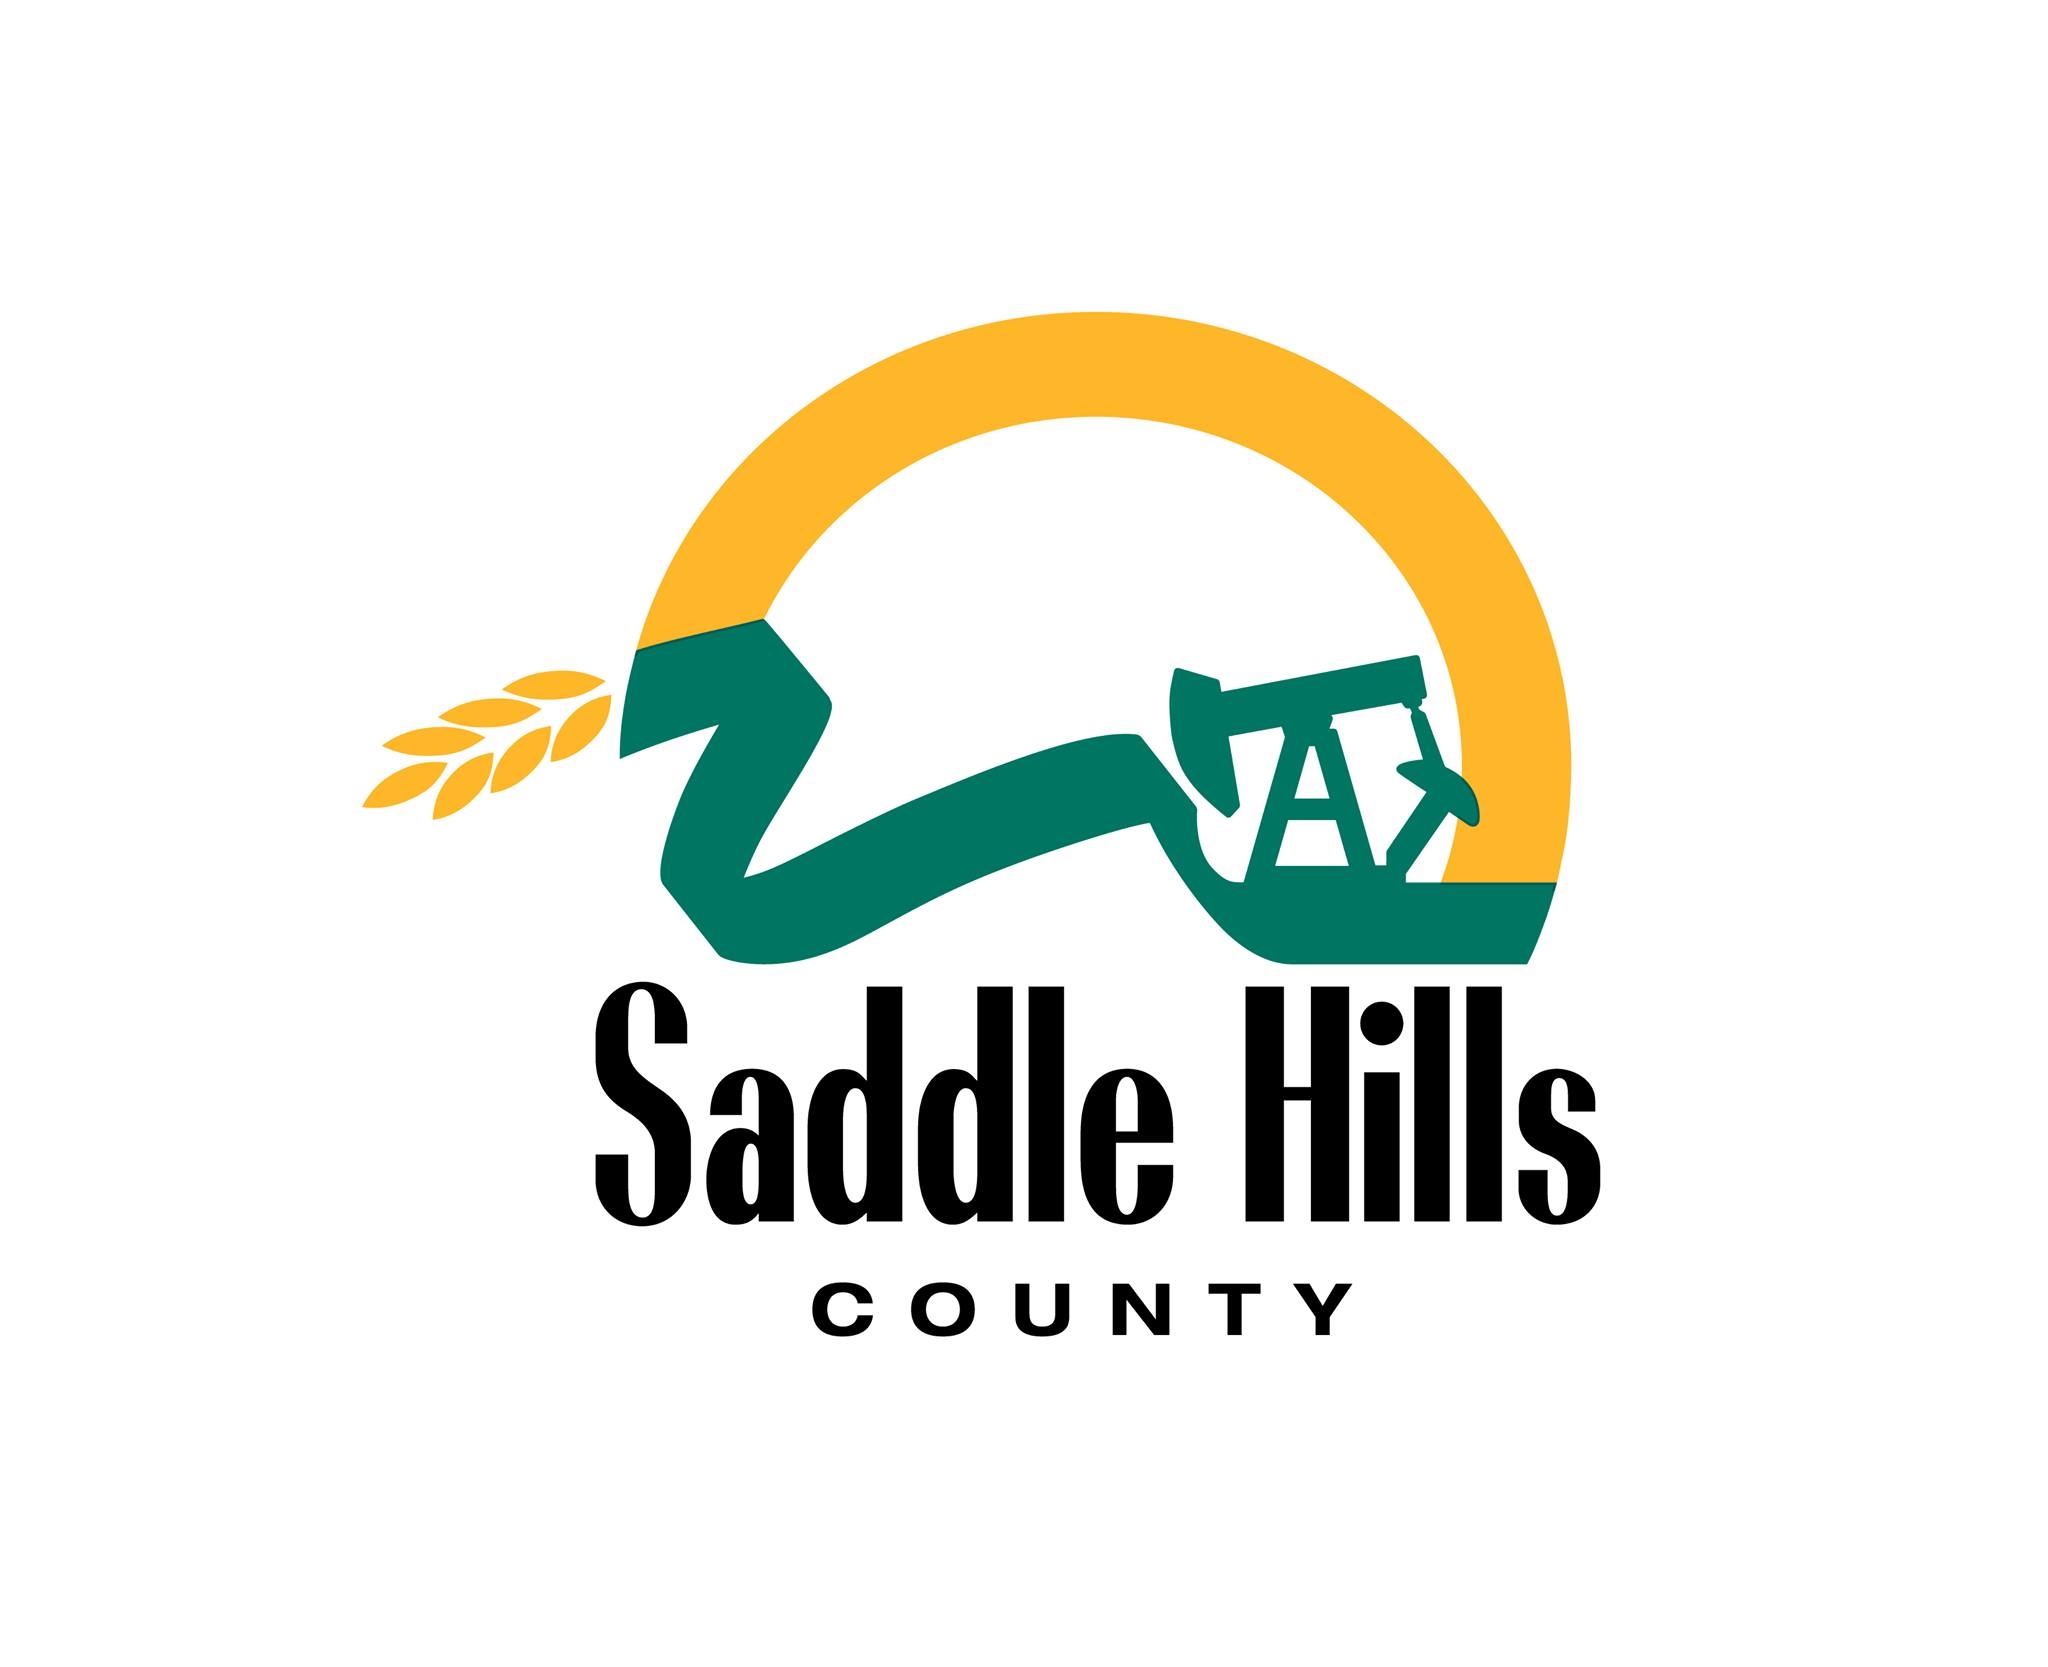 County of Saddle Hills